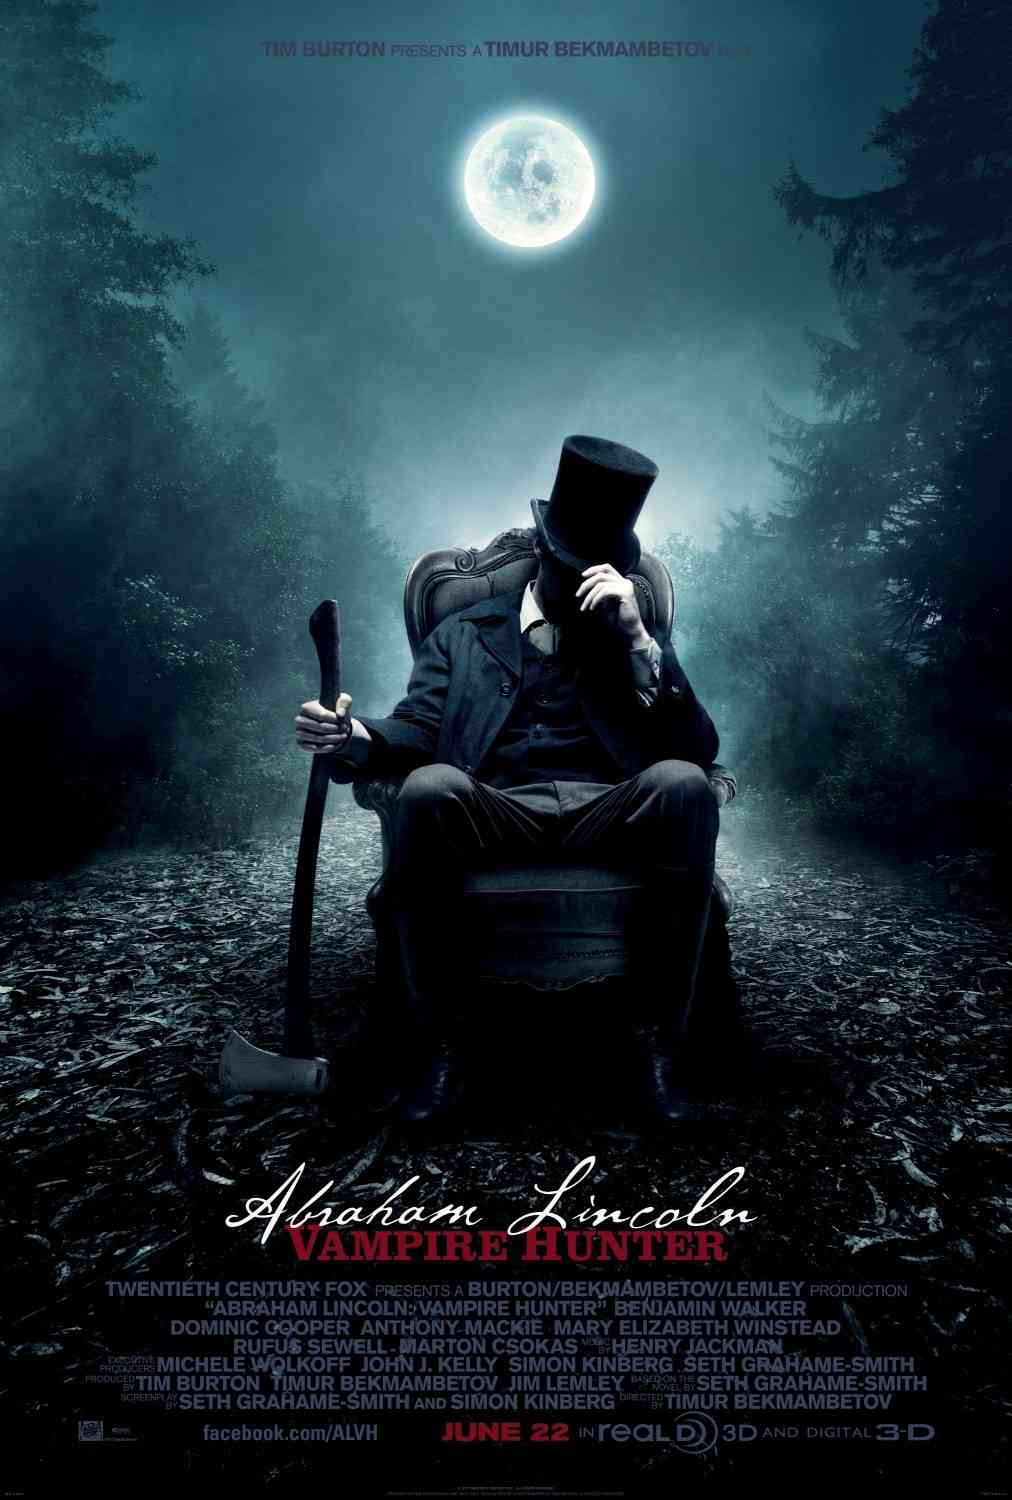 FULL MOVIE: Abraham Lincoln: Vampire Hunter (2012) [Action]